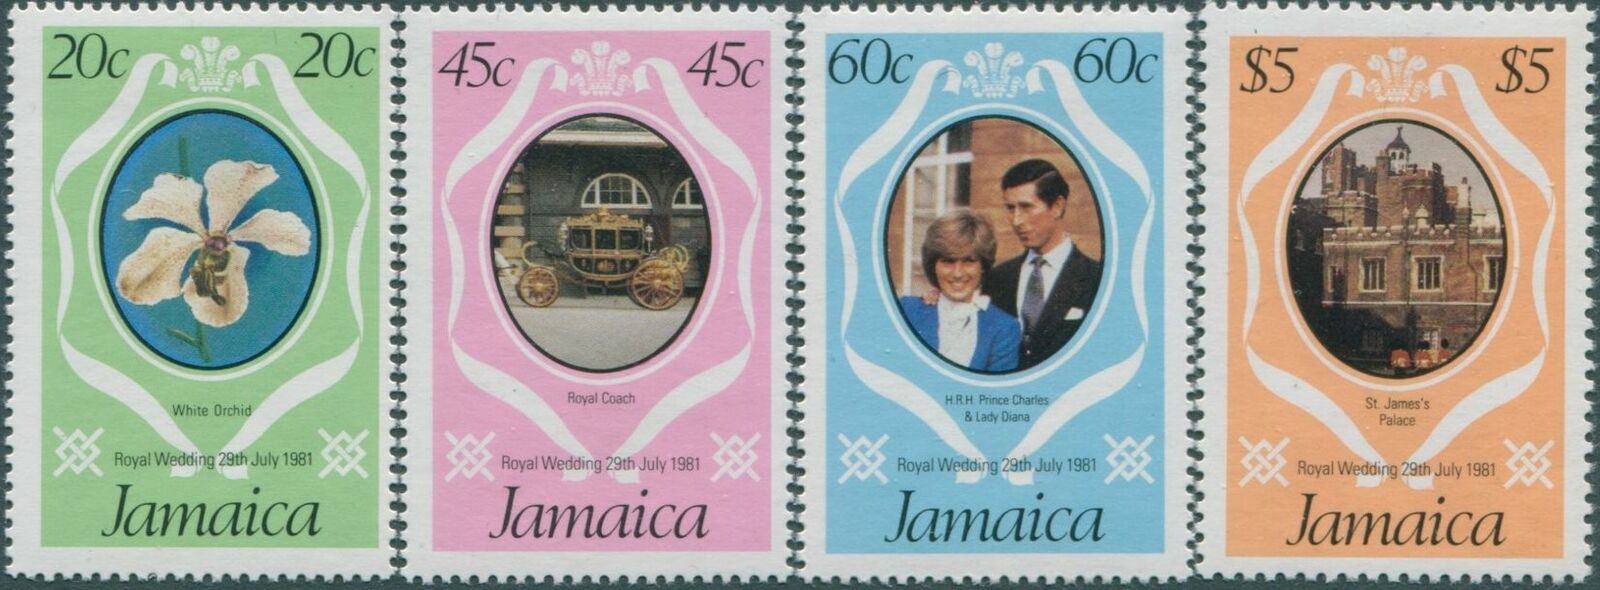 Jamaica 1981 SG516-519 Royal Wedding set MNH